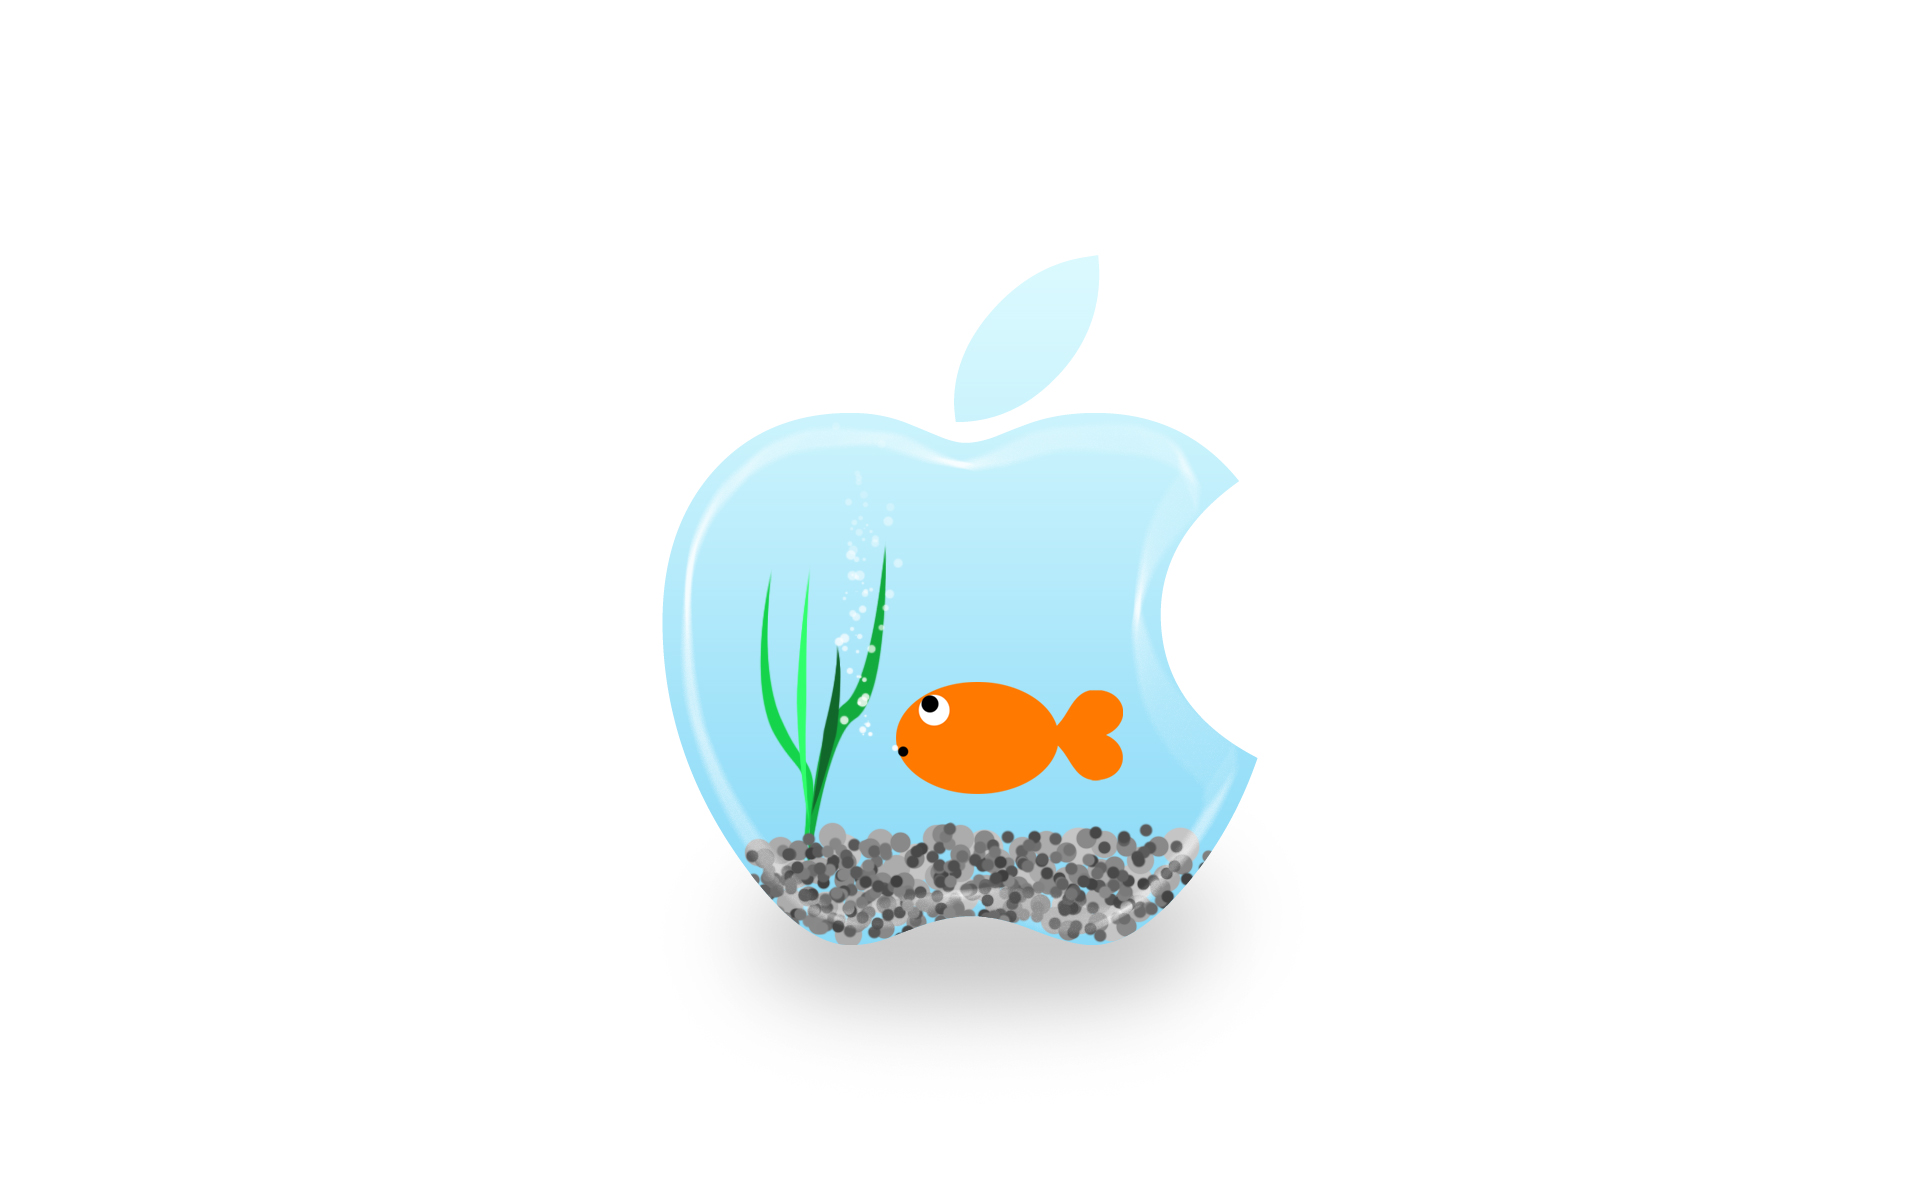 Эппл (Apple), садок для рыбы - обои на рабочий стол